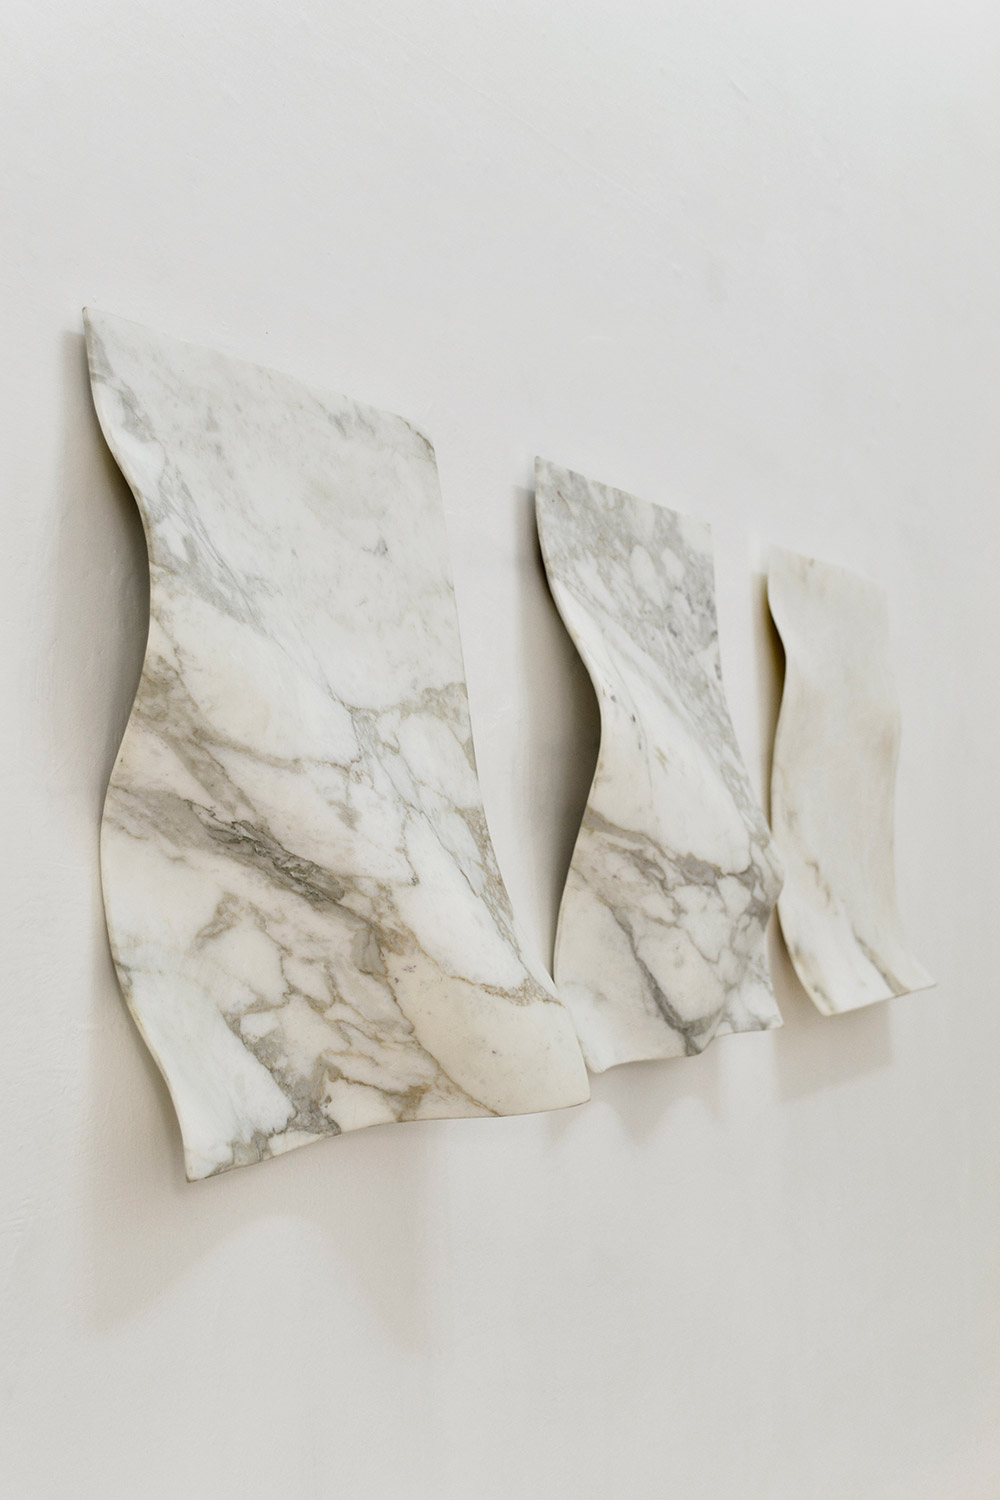 Antonio Trotta, Sospiri, 1999-2002, marmo, 37x46x8 cm ognuno